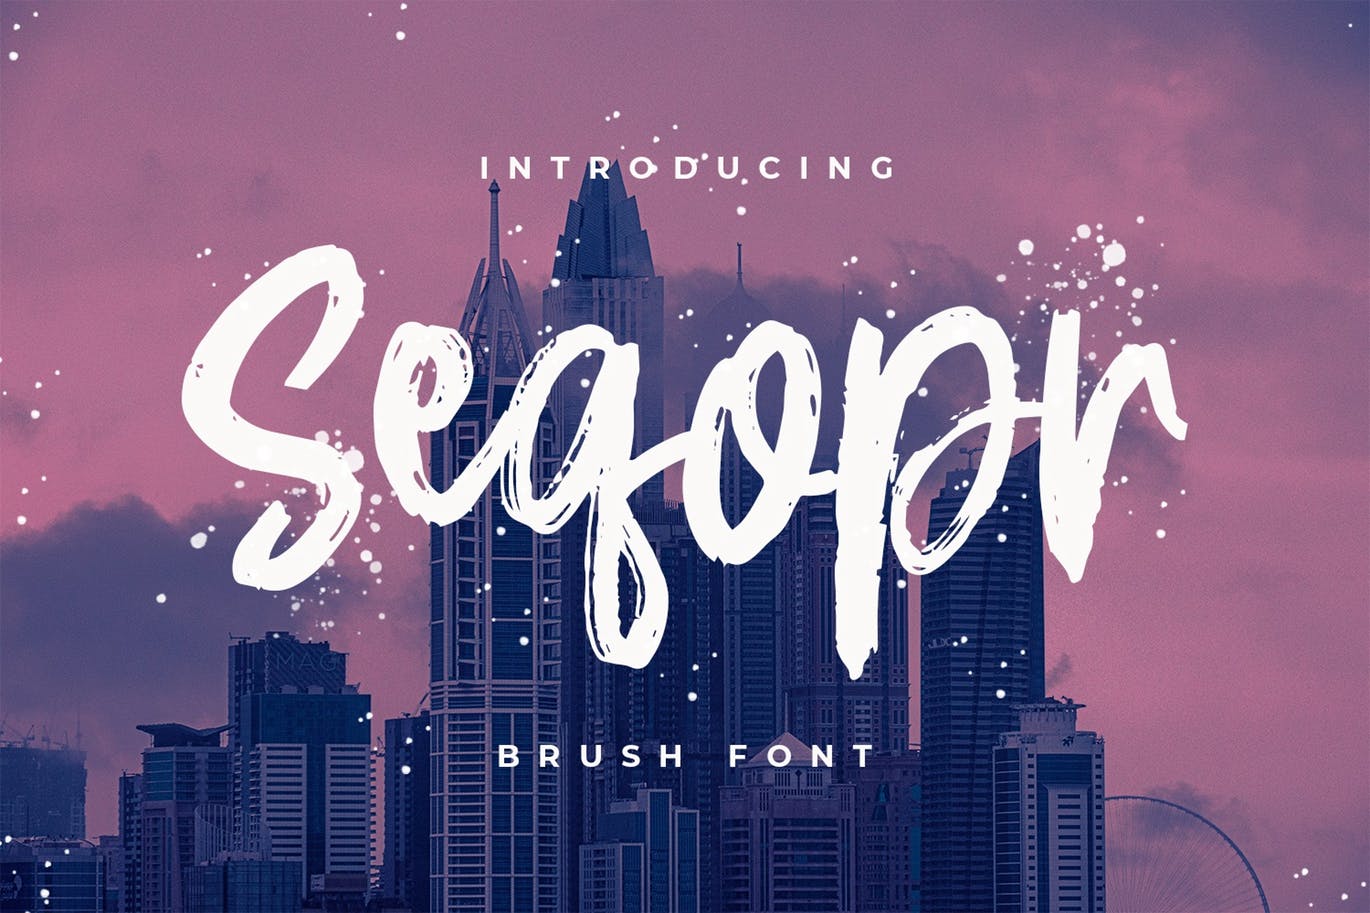 Logo/印刷设计英文笔刷字体第一素材精选 Seqopr – The Brush Font插图